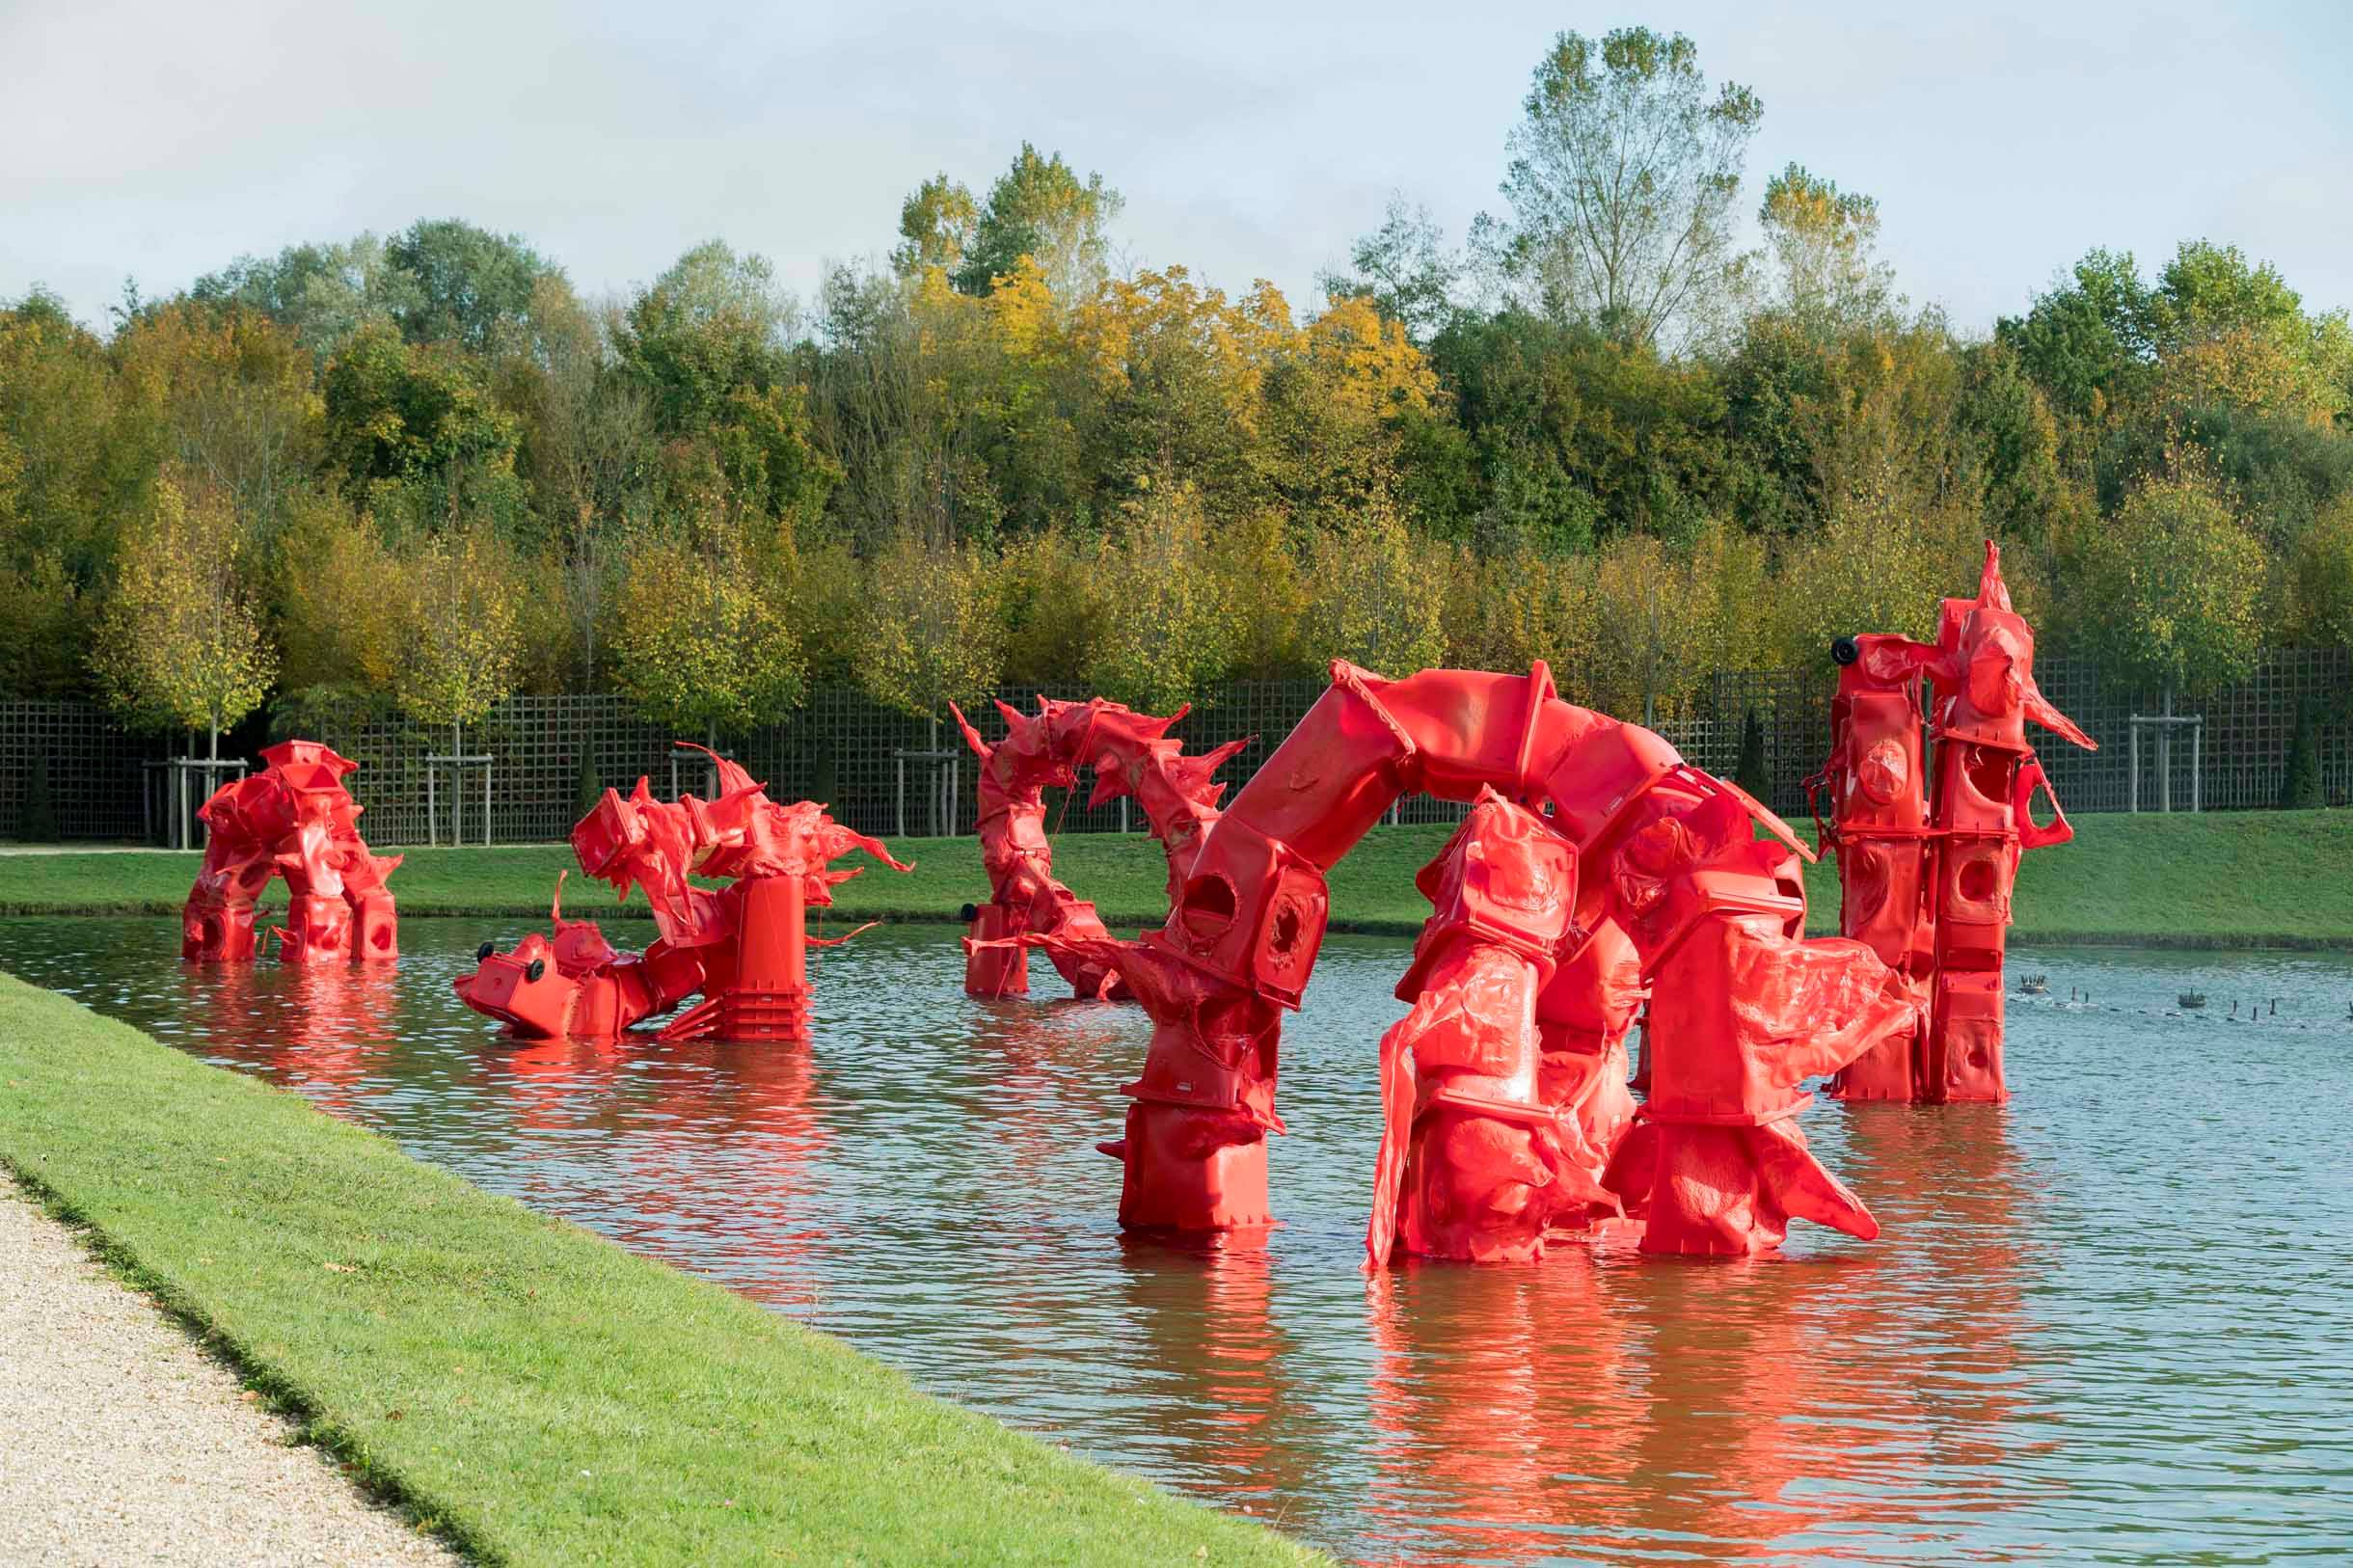 Contemporary art invades the gardens at the Château de Versailles